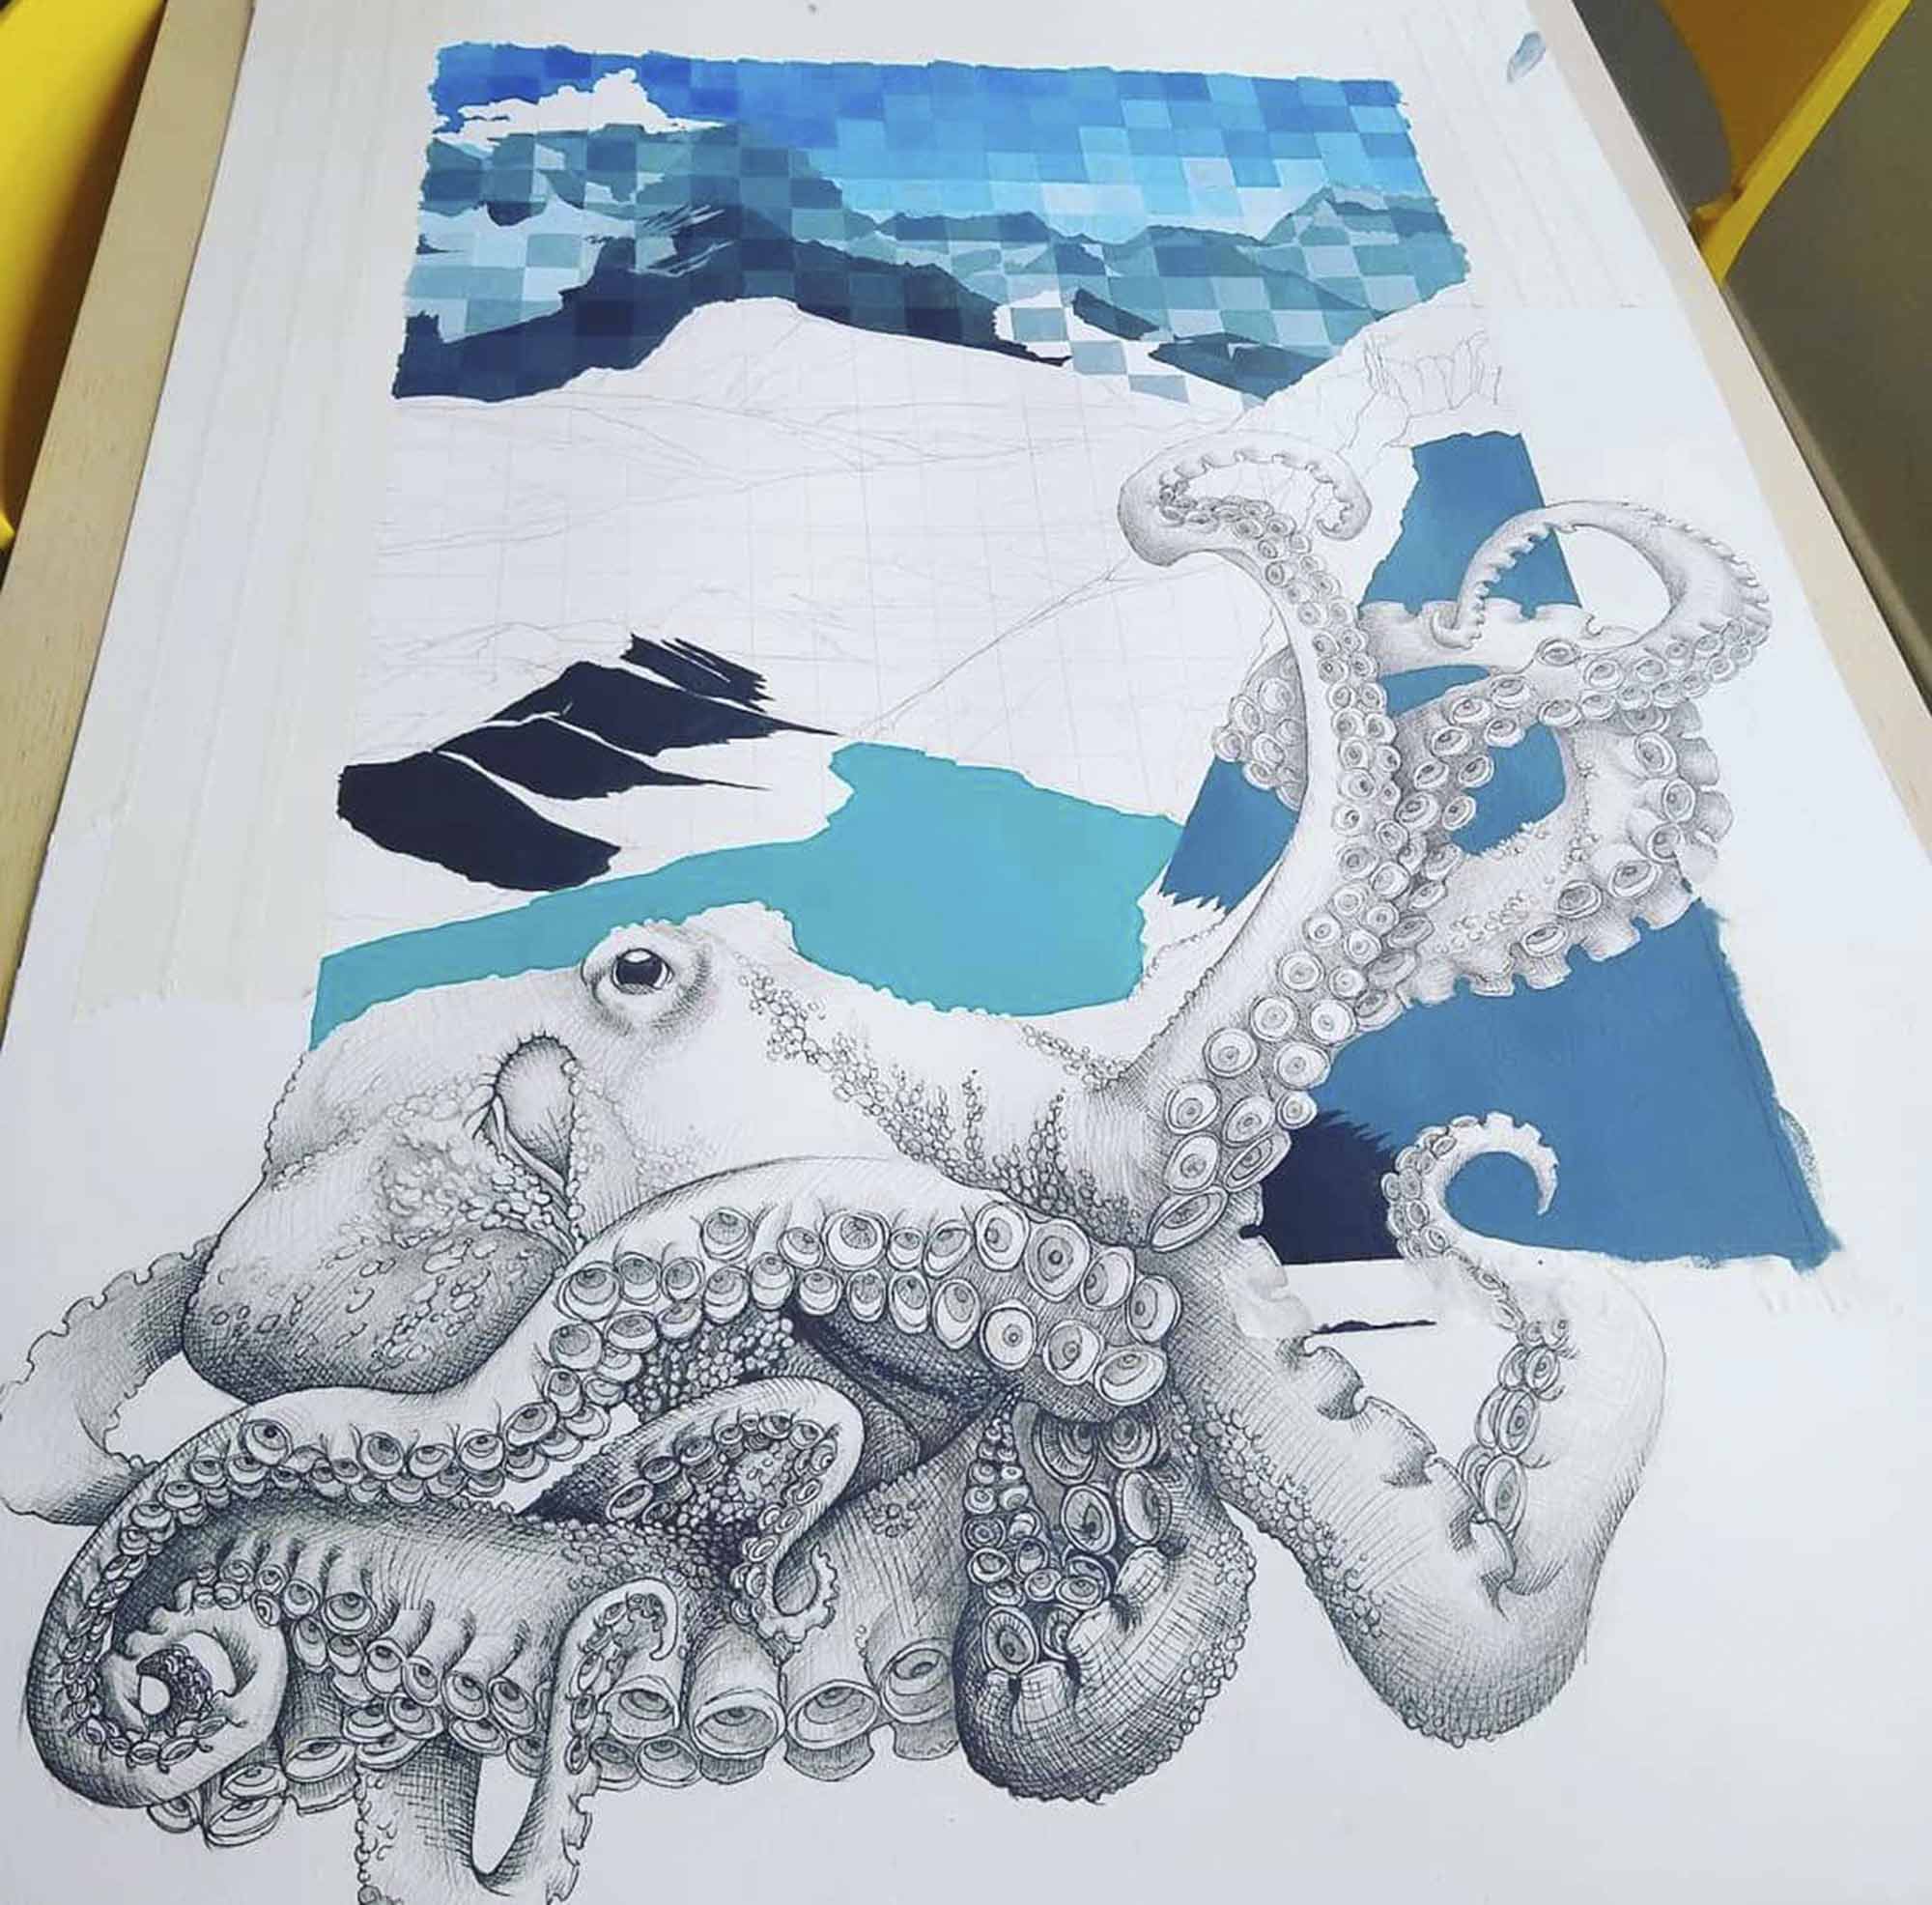 Eva Menezz- Octopus (detalle)